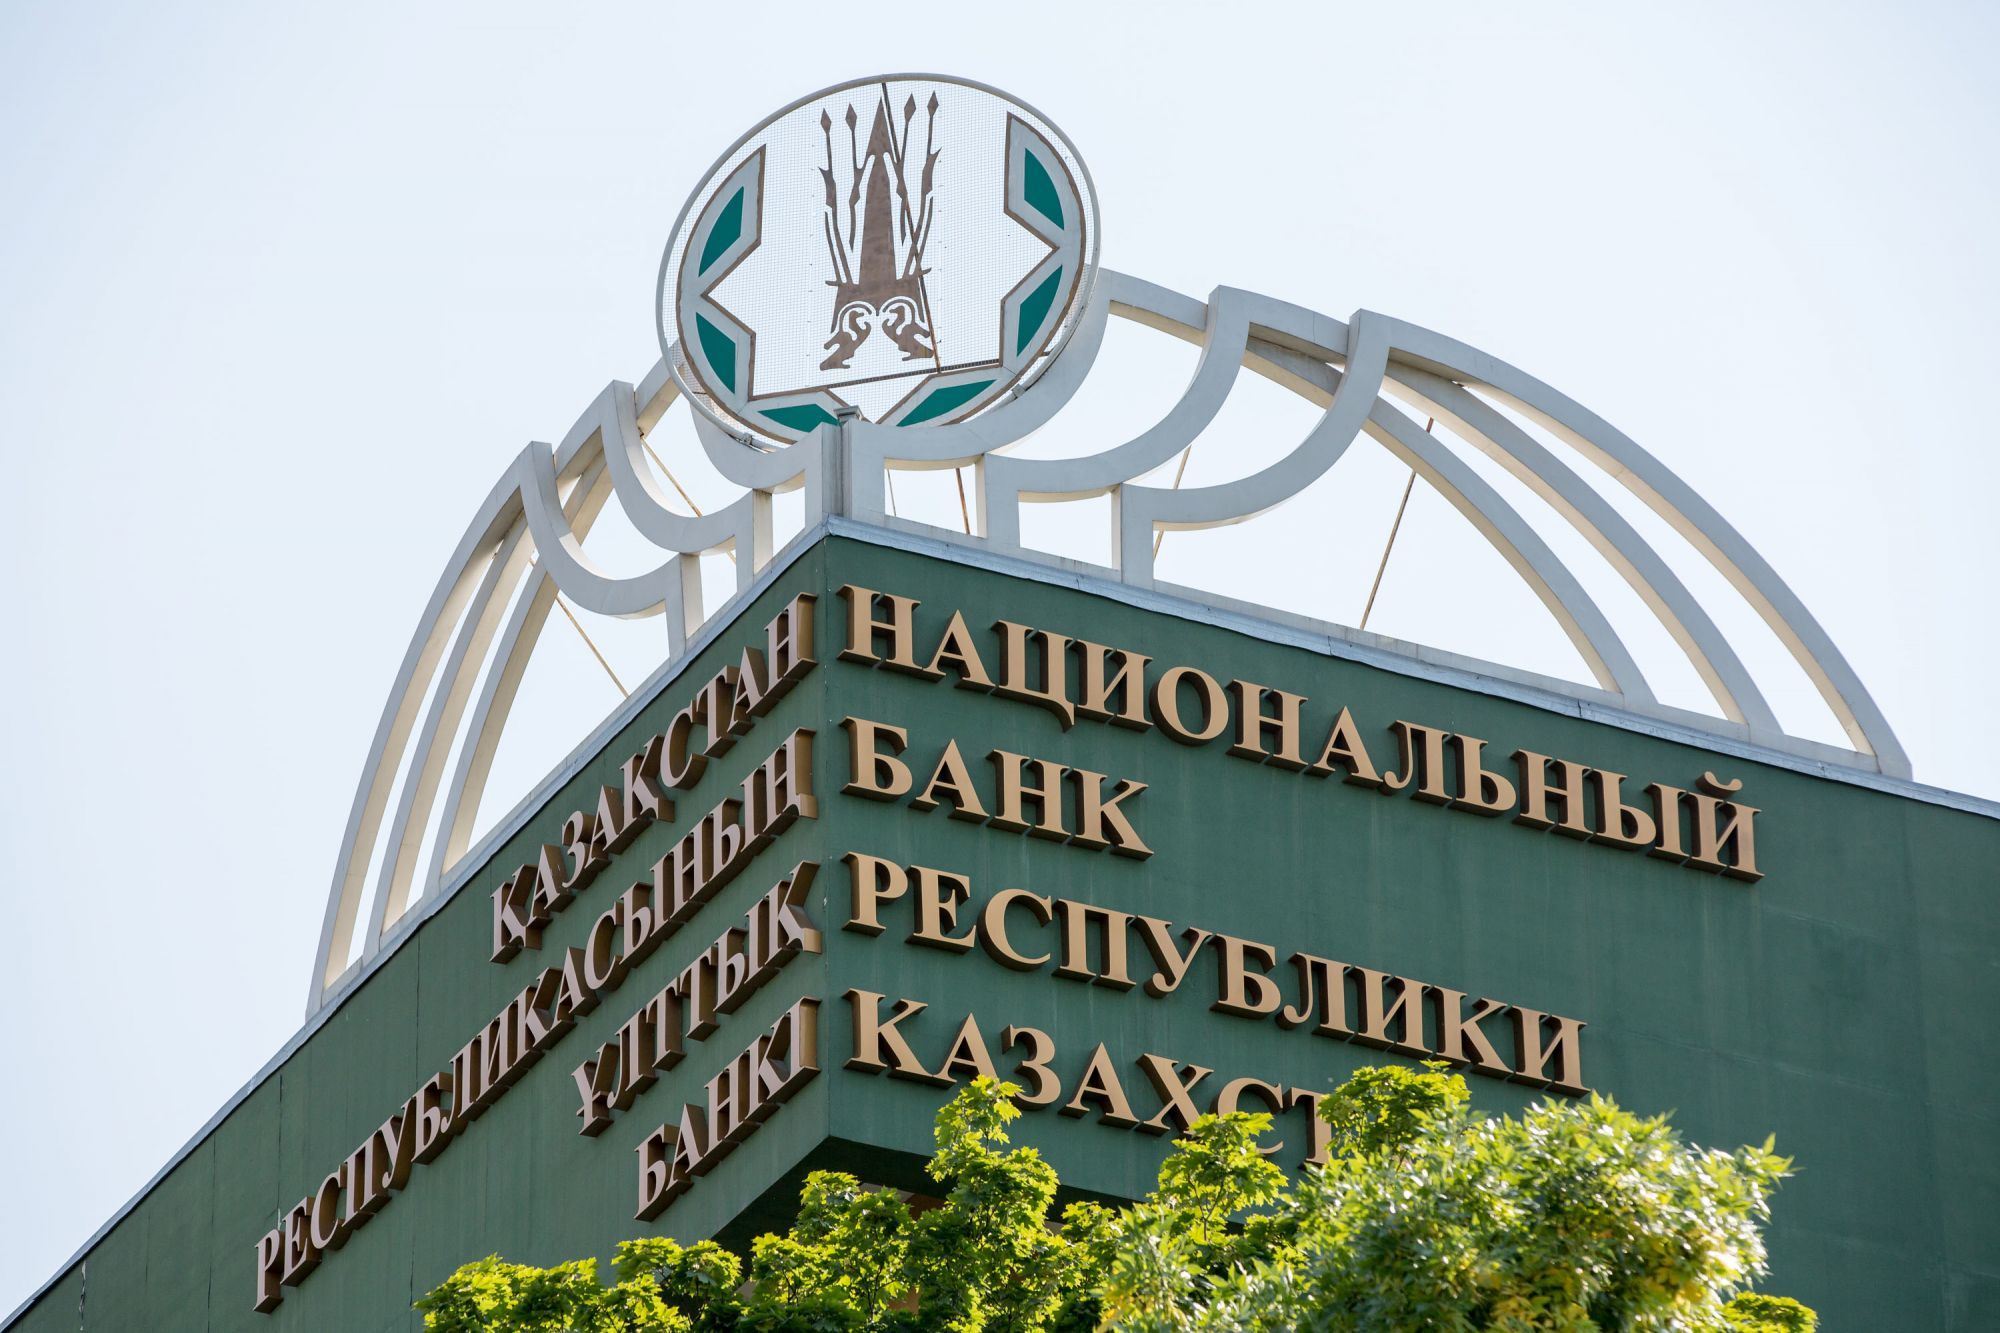  Нацбанк РК оставит базовую ставку без изменений – аналитики Газпромбанка